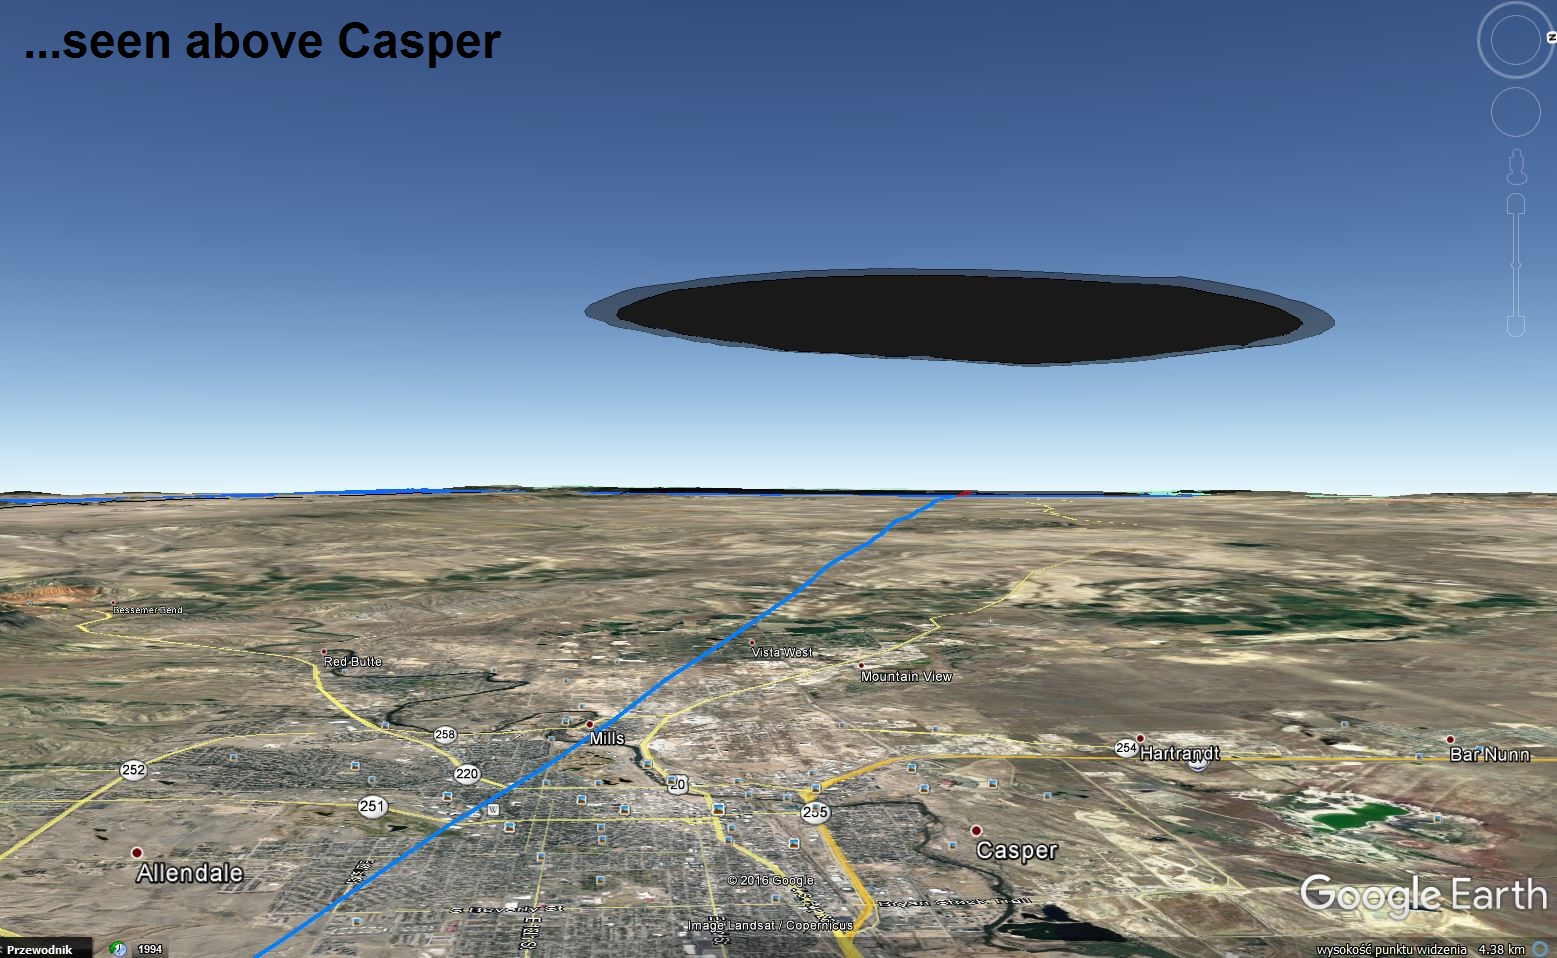 Google Earth 2017 total solar eclipse vizualisation above Casper